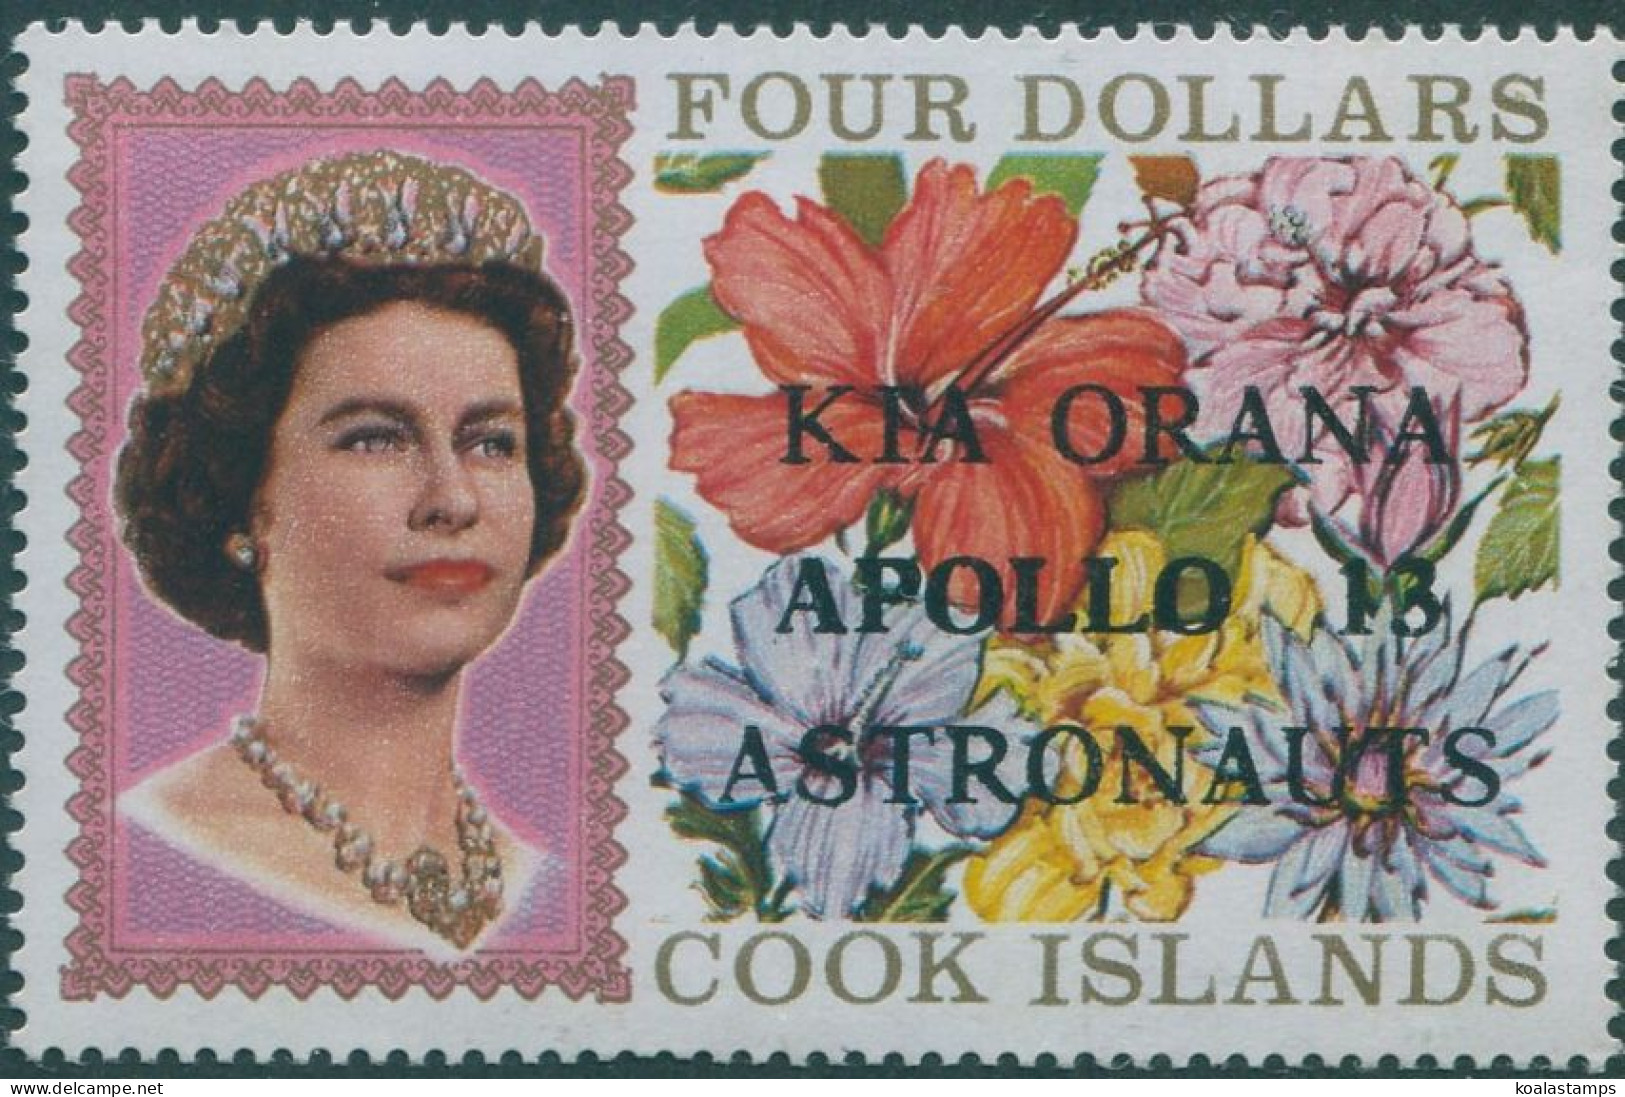 Cook Islands 1970 SG327 $4 QEII Flowers KIA ORANA APOLLO 13 ASTRONAUTS Ovpt MNH - Cook Islands